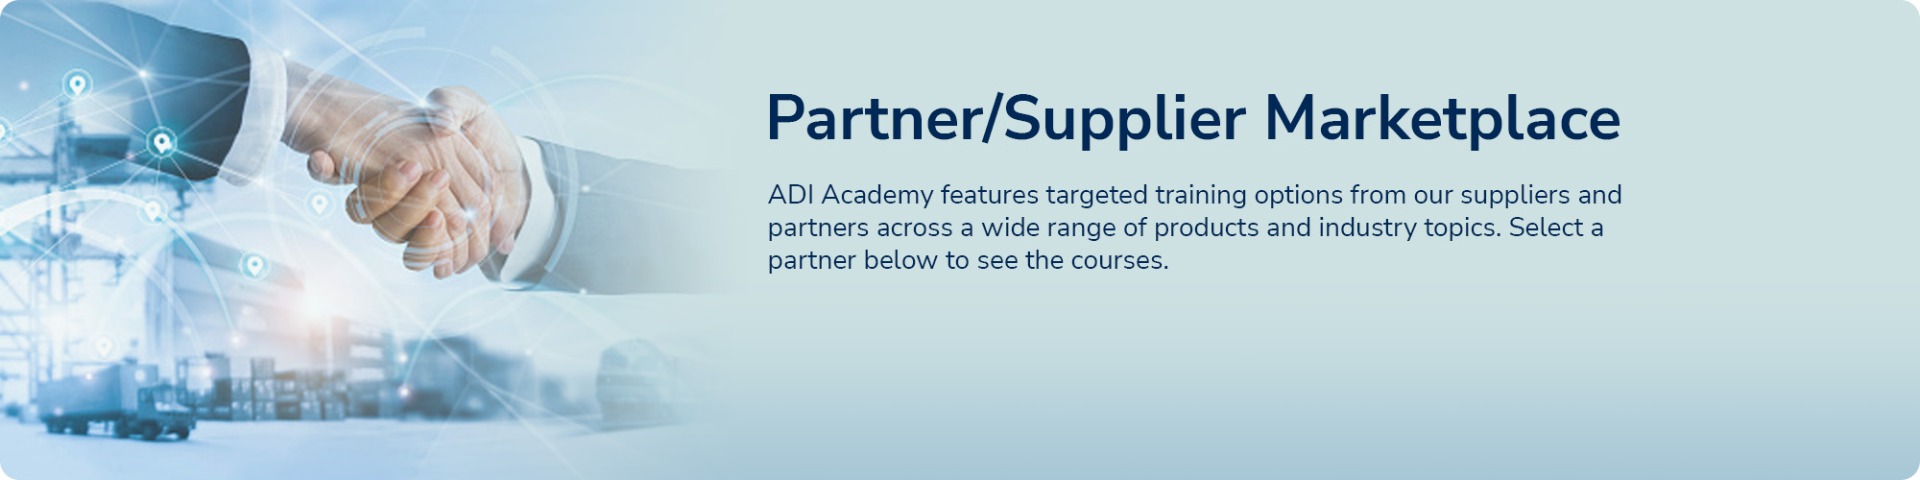 Partner_Supplier_Marketplace